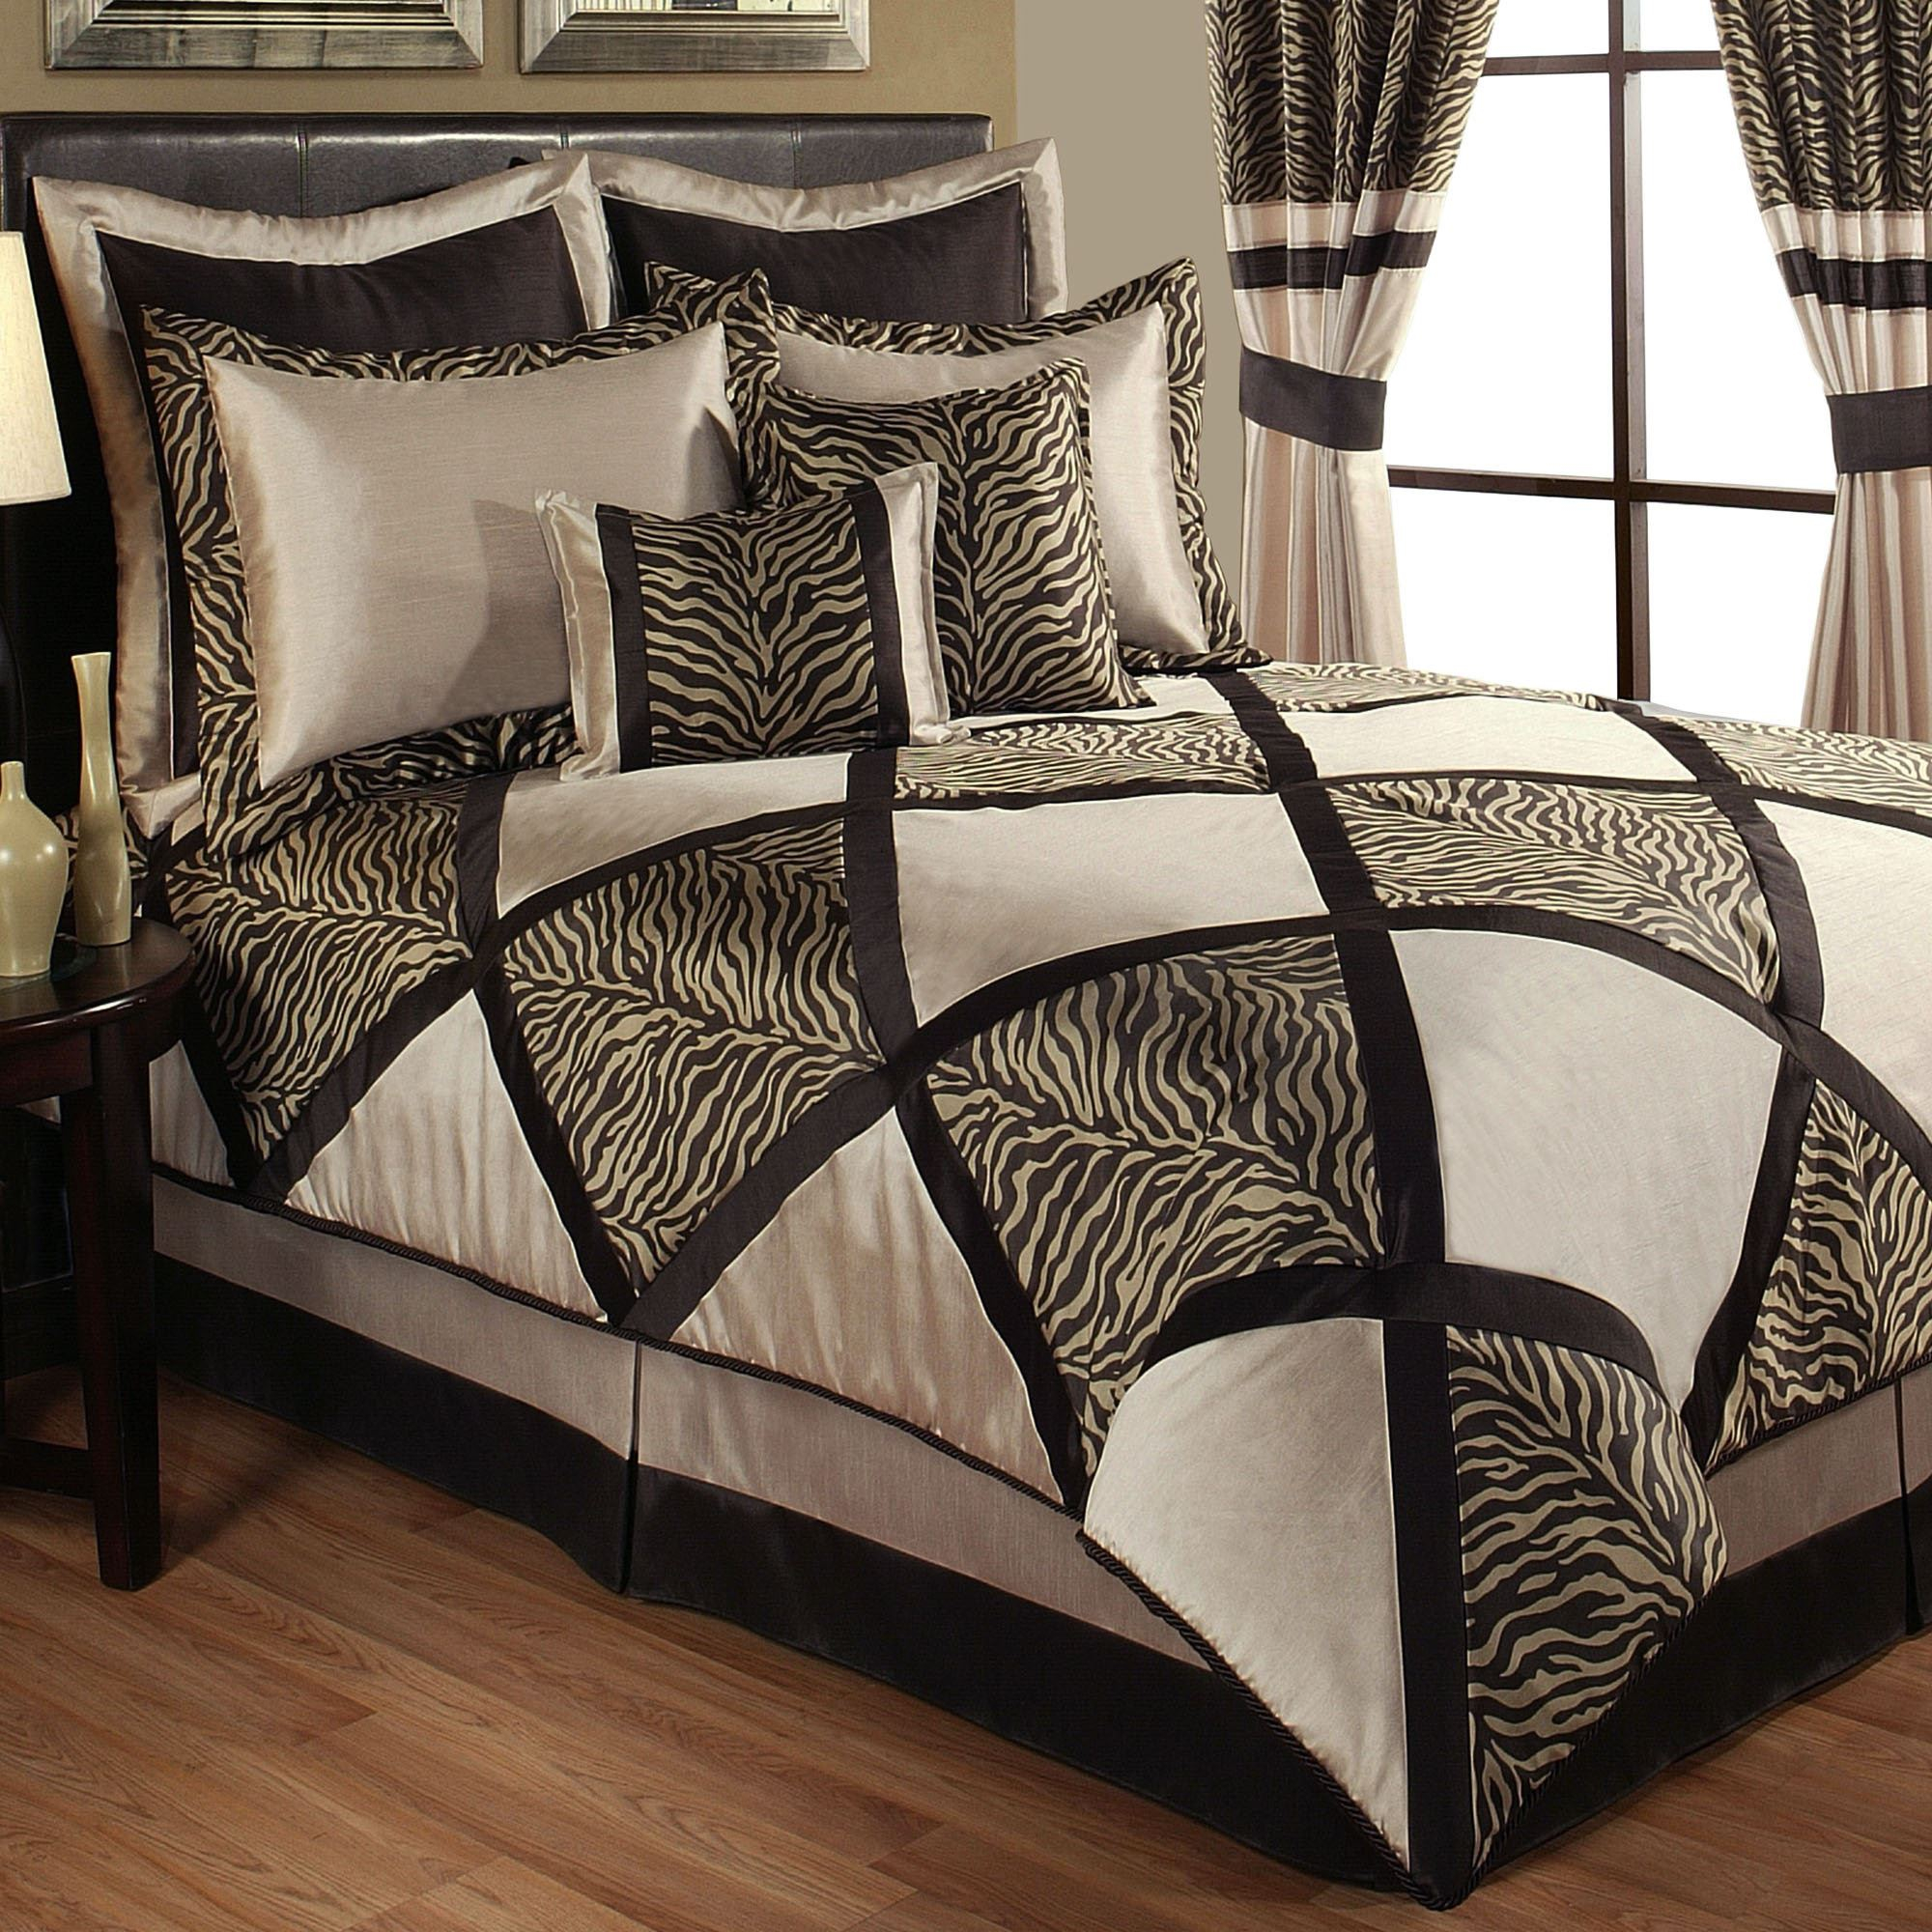 True Safari Zebra Print Comforter Bedding for size 2000 X 2000